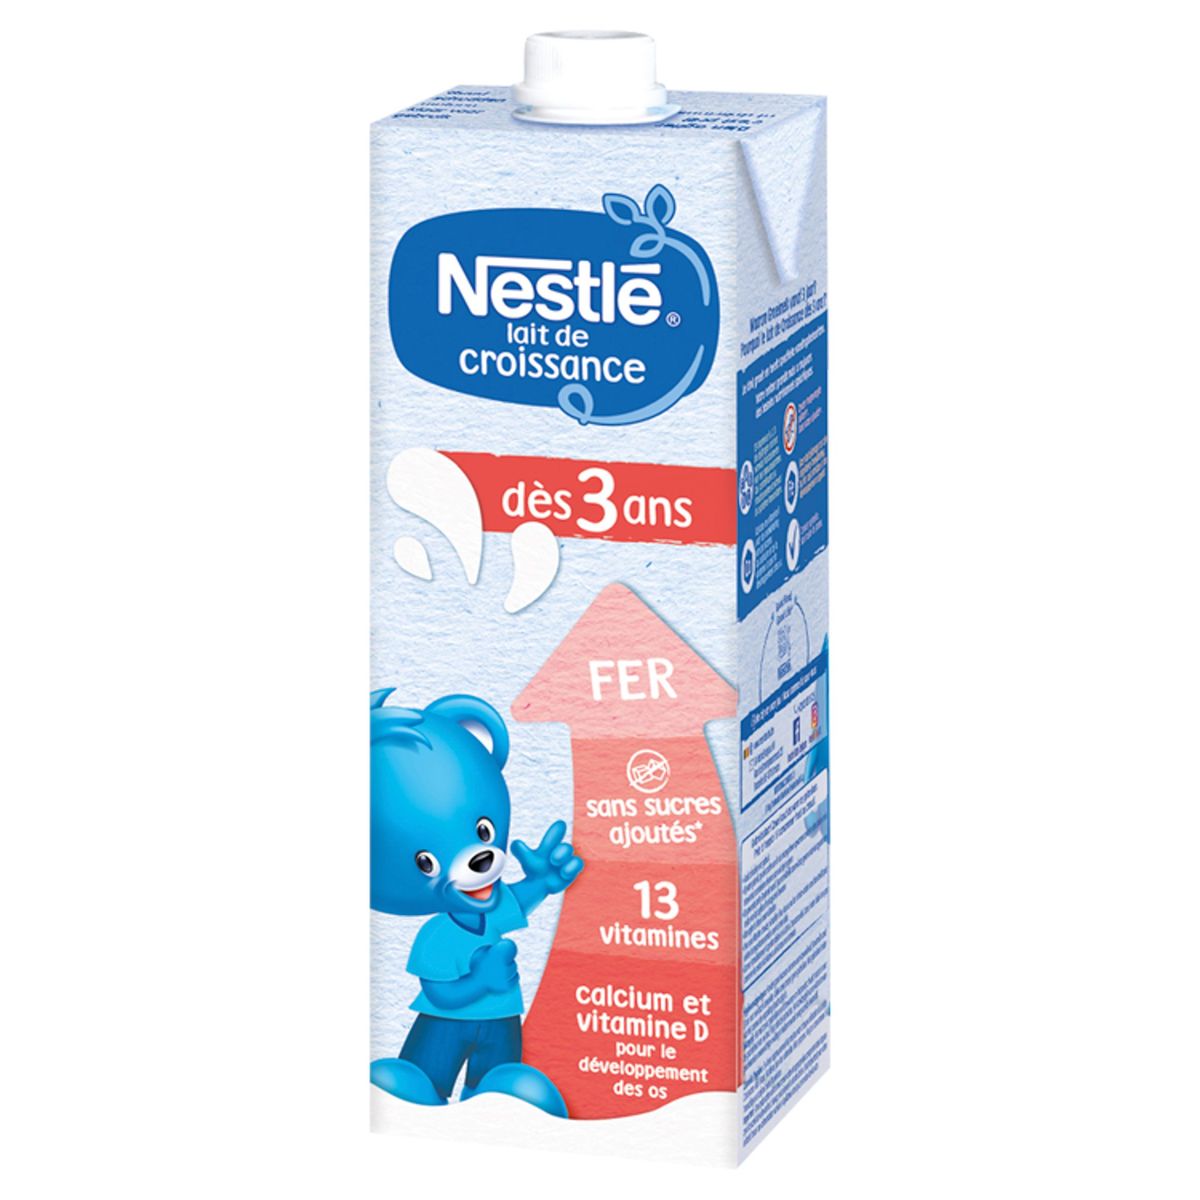 Nestlé Groeimelk 3+ vanaf 3 jaar 1L